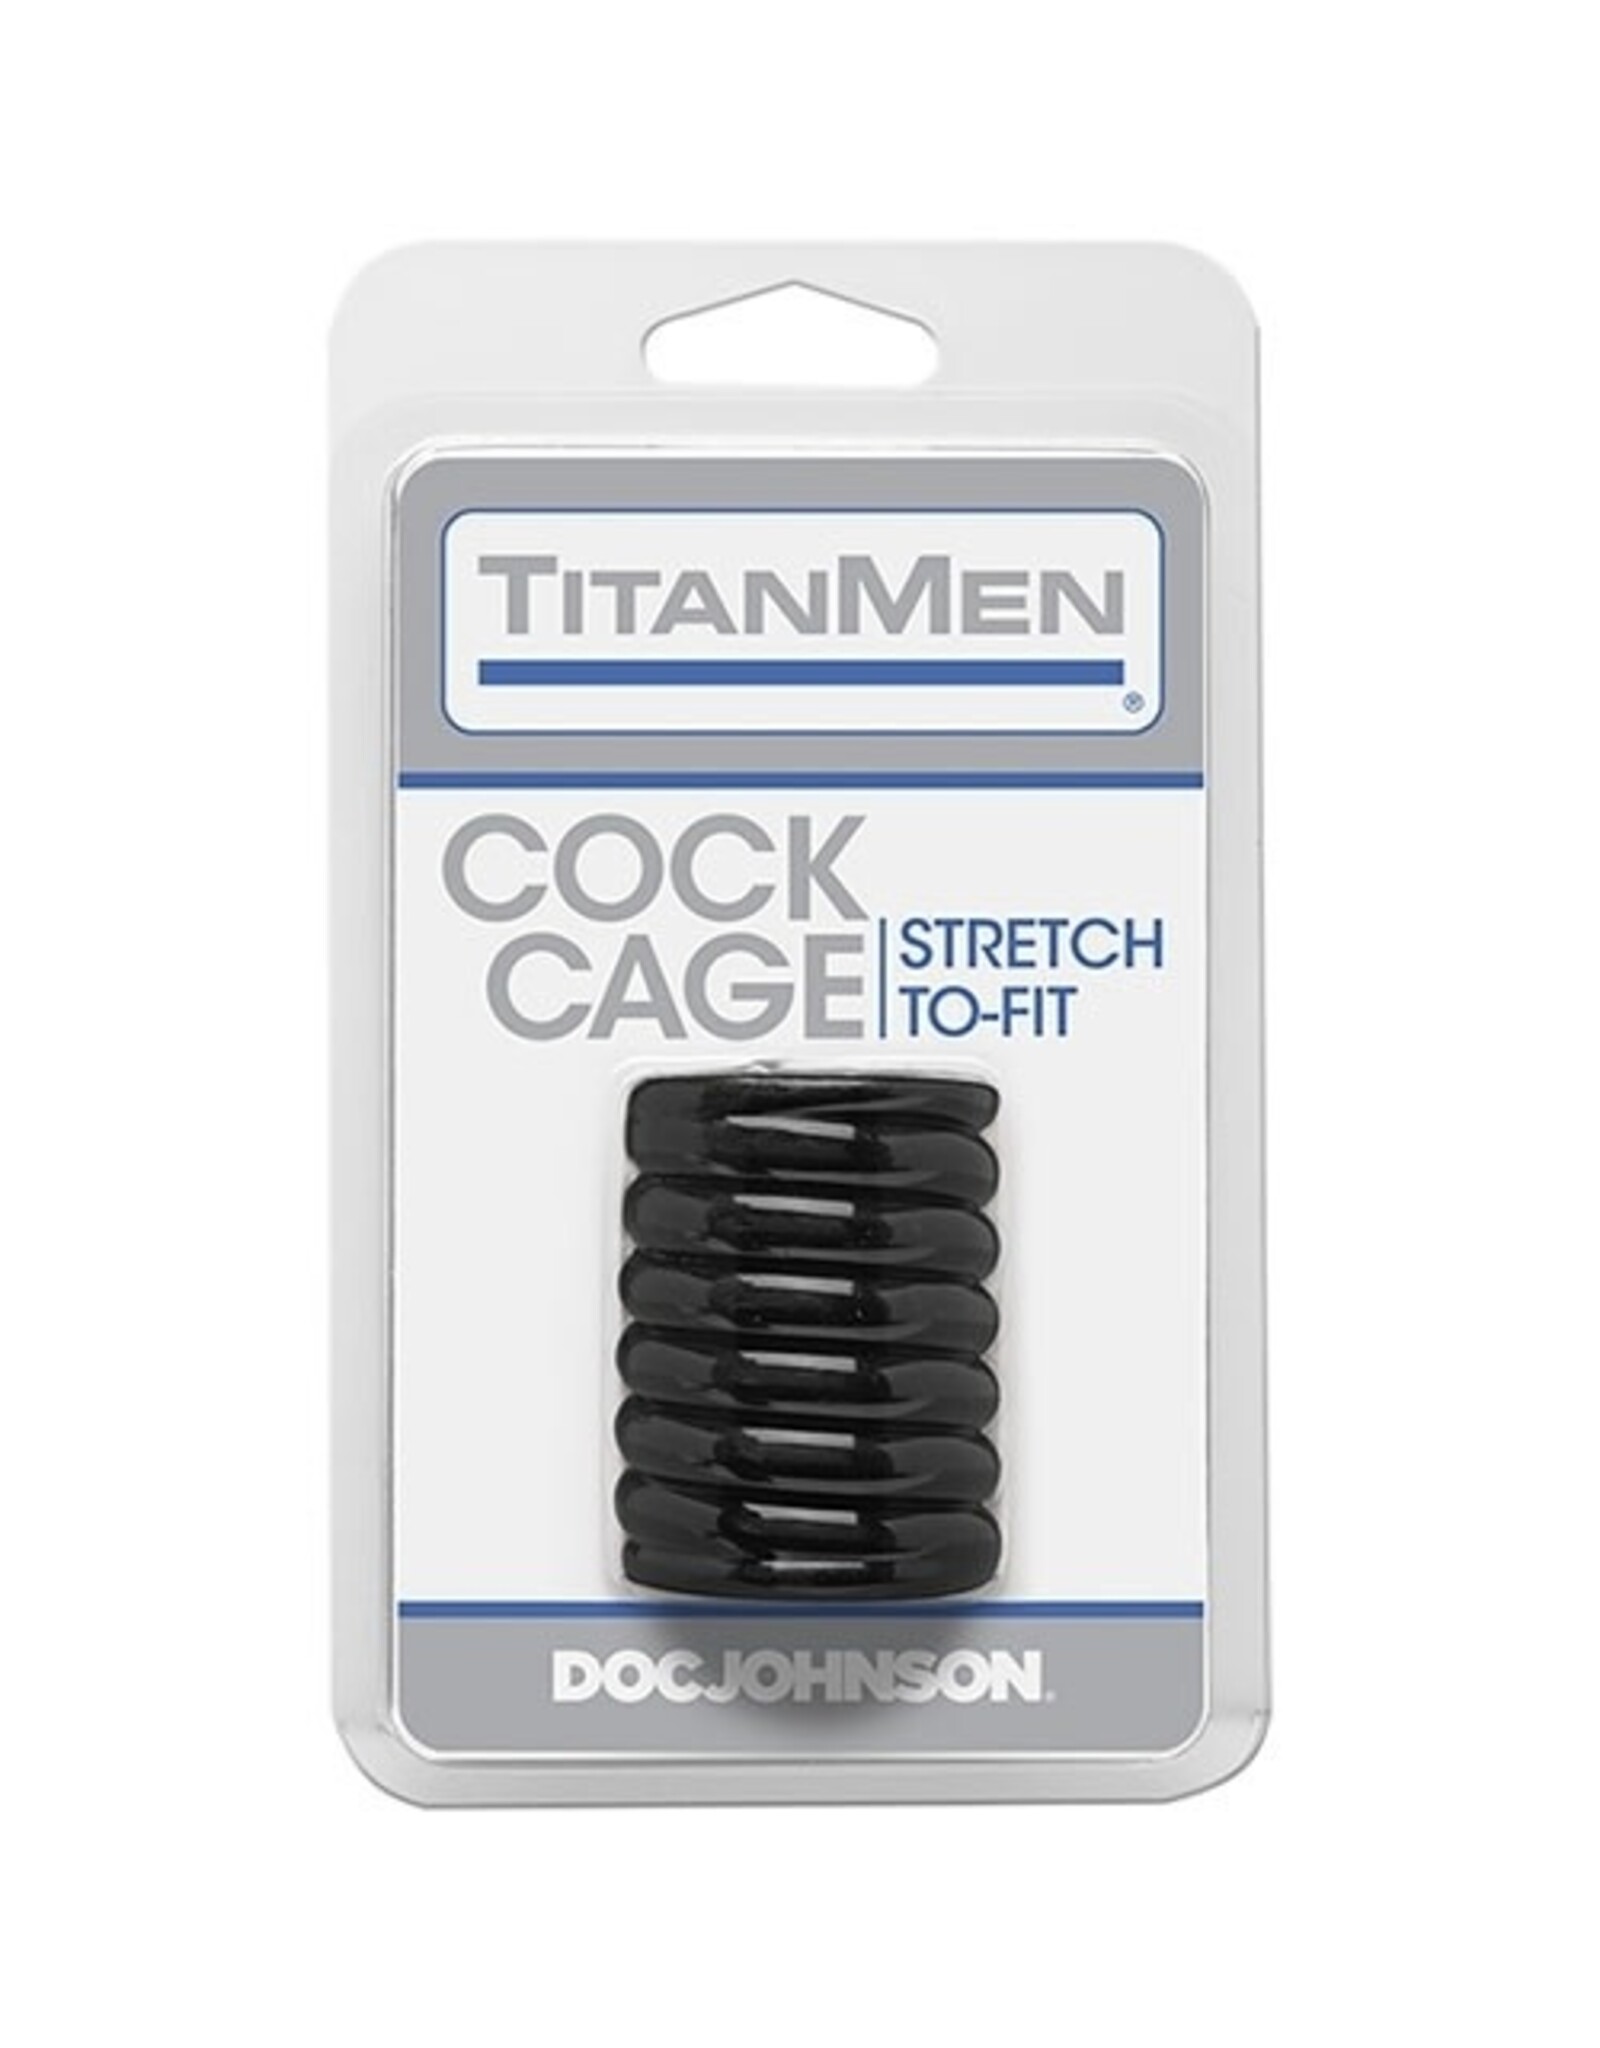 Doc Johnson TitanMen Tools - Cock Cage - Black